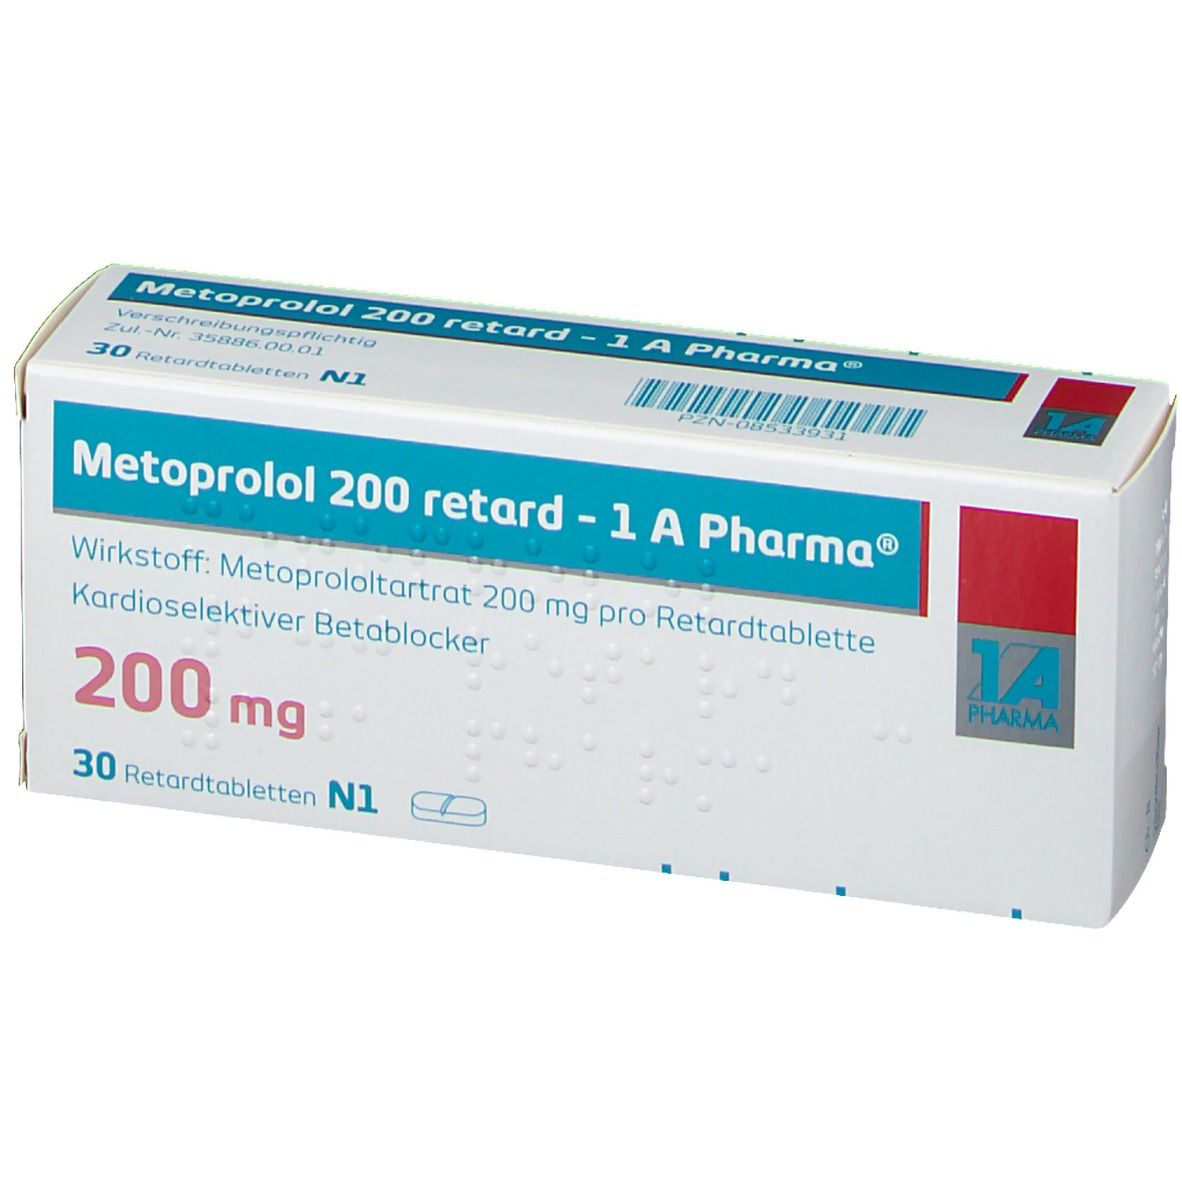 Metoprolol 200 retard - 1 A Pharma®